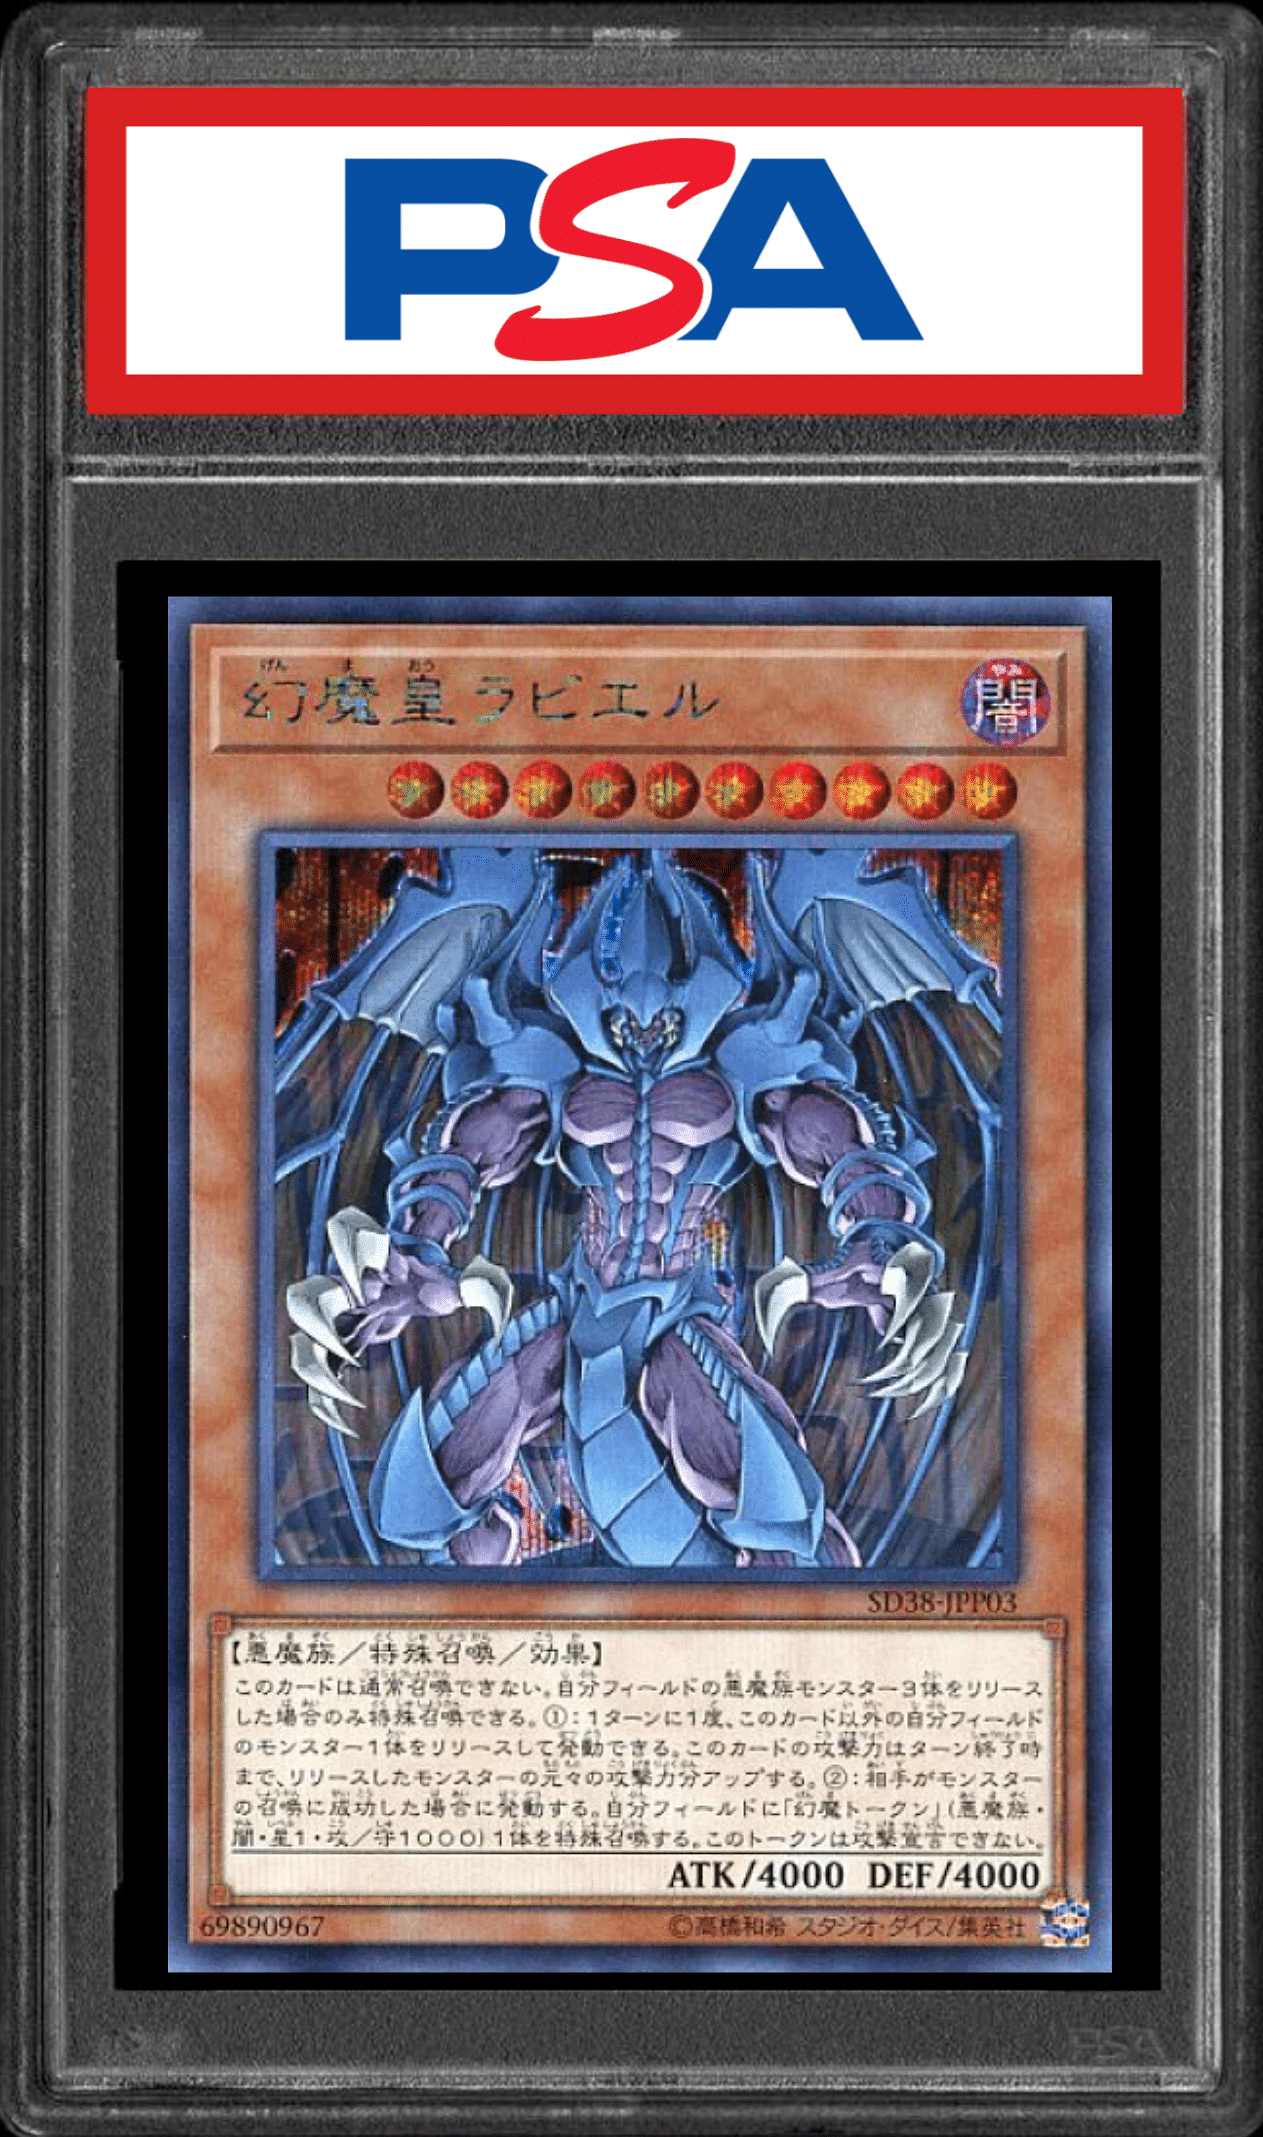 Raviel Lord of phantasms | SD38-JPP03 | PSA ChitoroShop